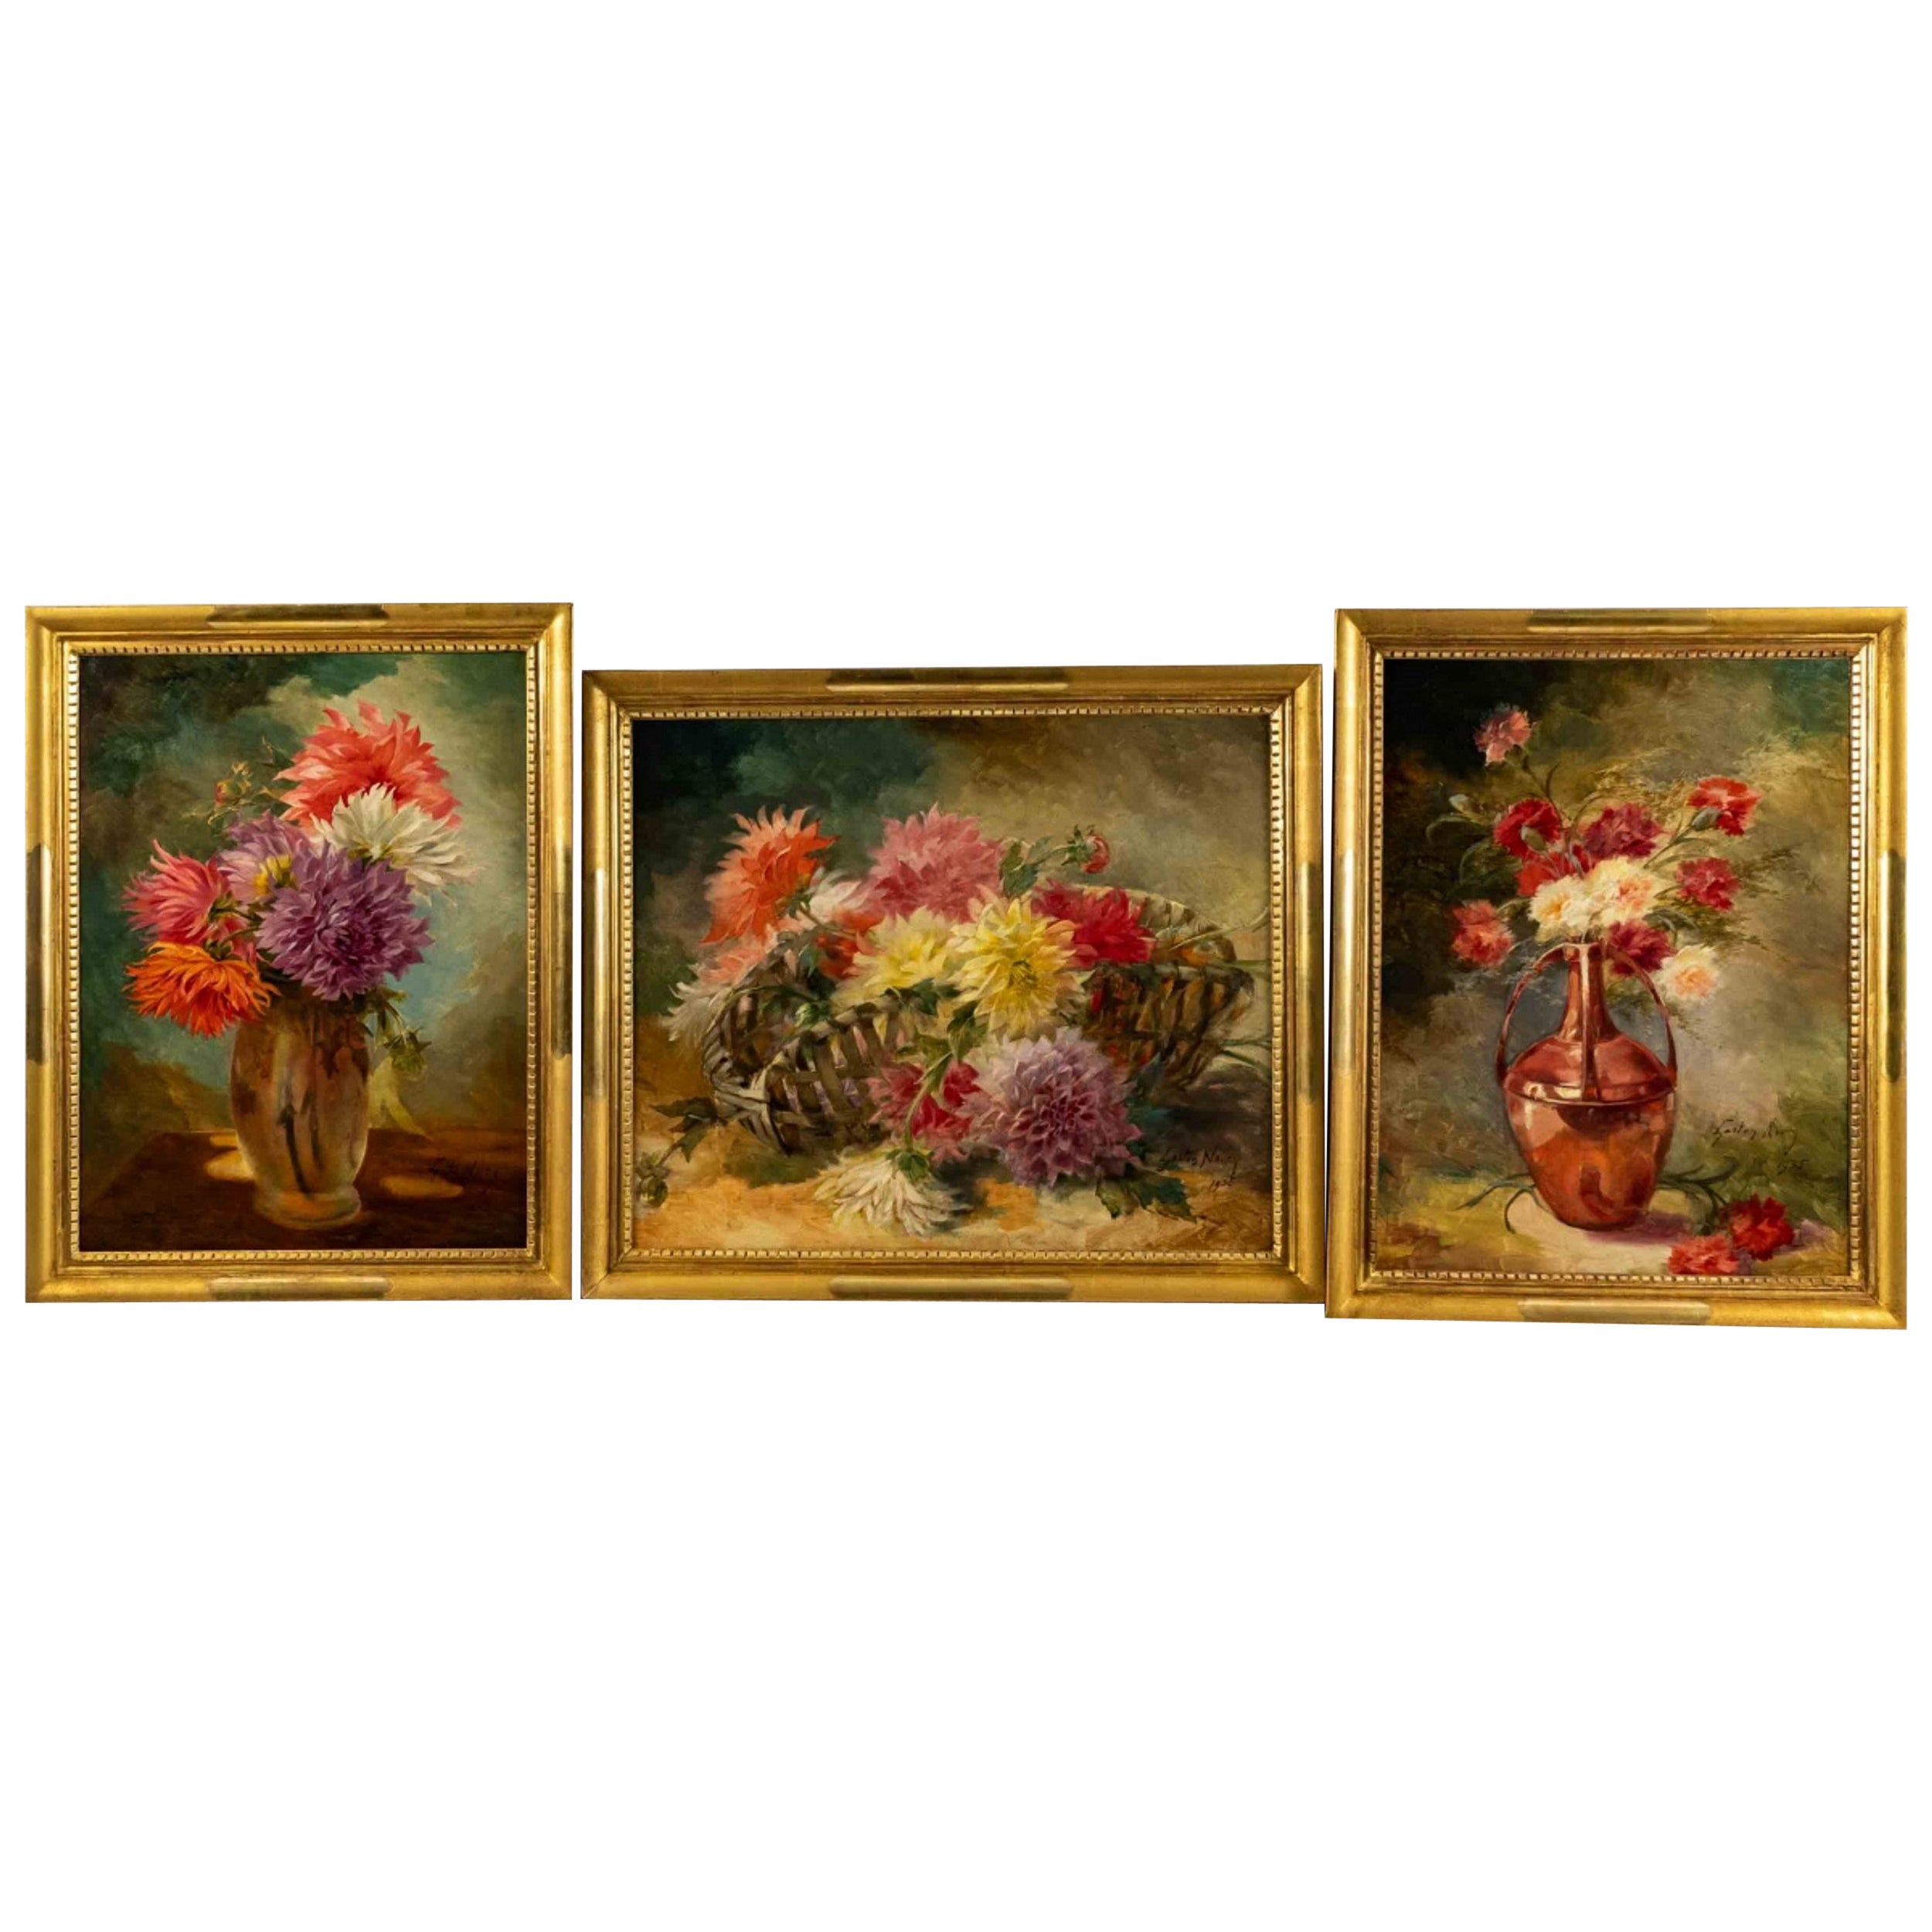 Triptych Oils On Canvas - Still Life - Gaston Noury - Circa: 1935 - Period: Art 